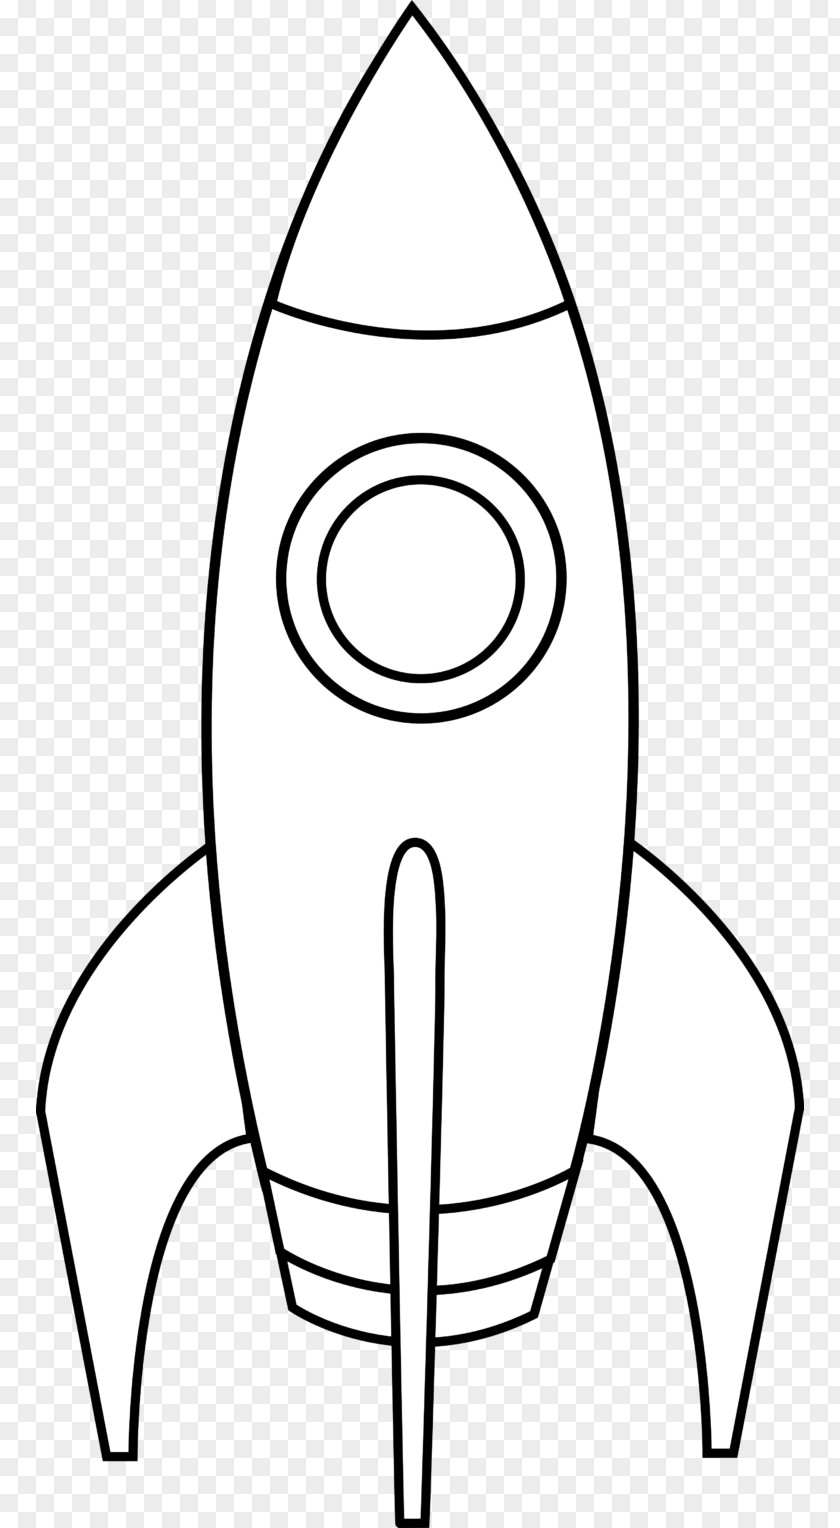 Rocket Spacecraft SpaceShipOne Black And White Clip Art PNG